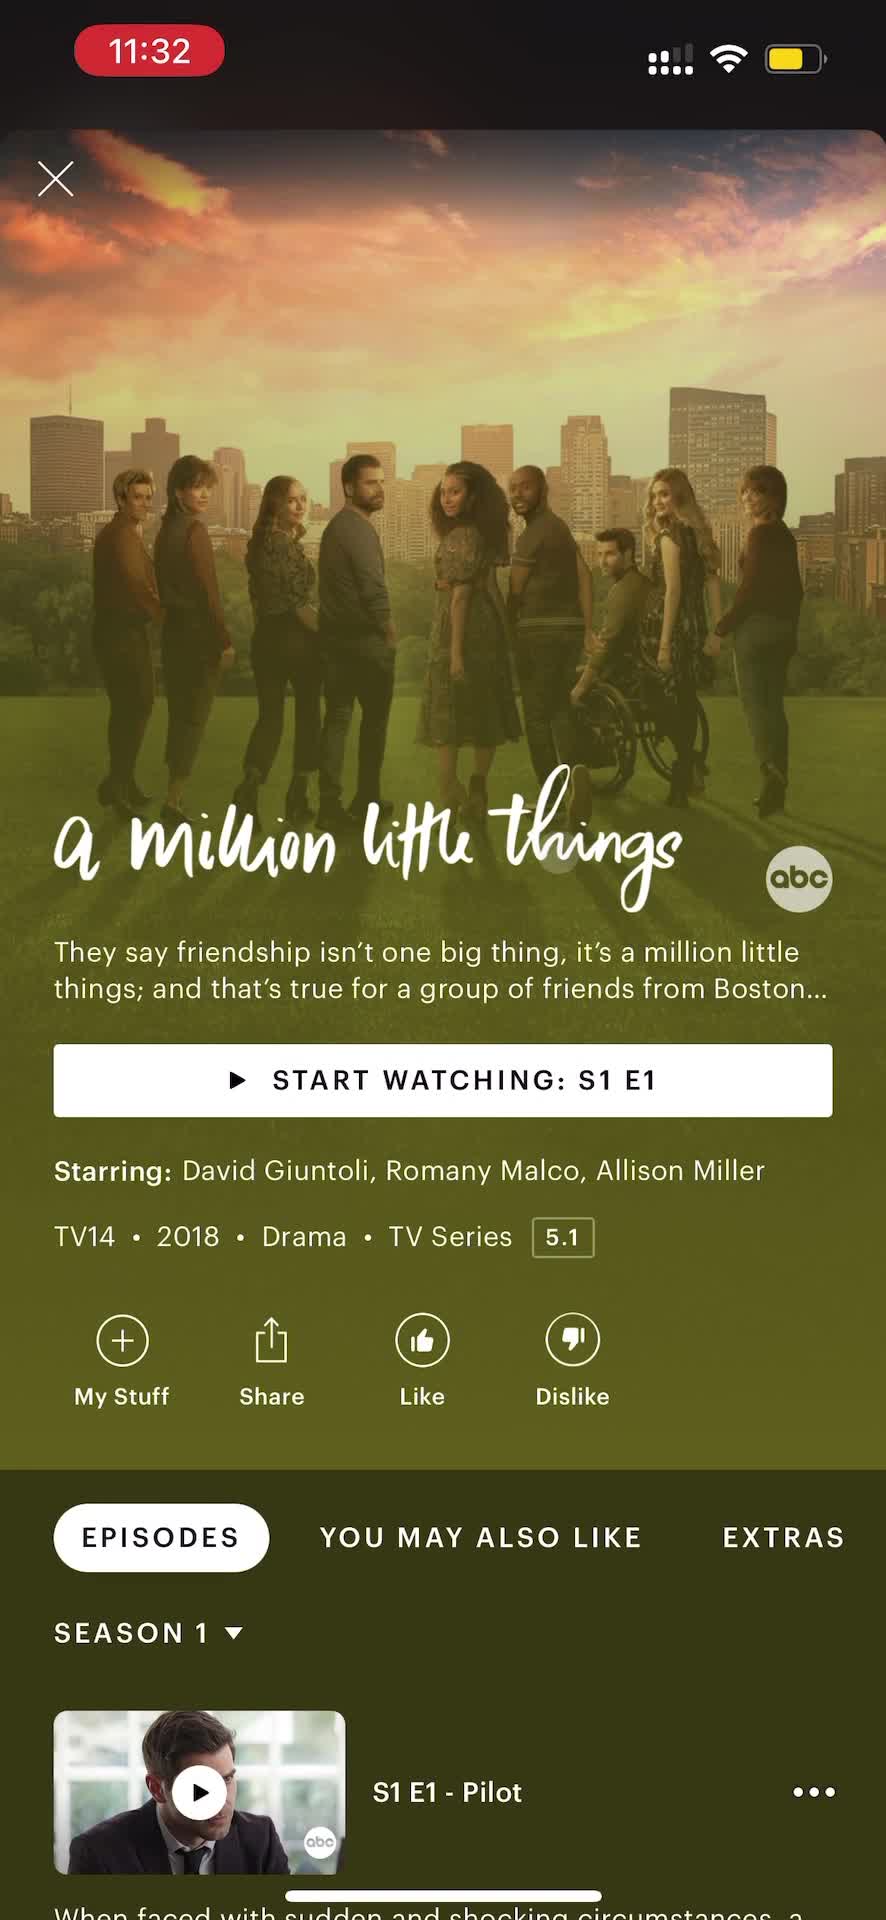 Screenshot of Show details on Saving on Hulu user flow